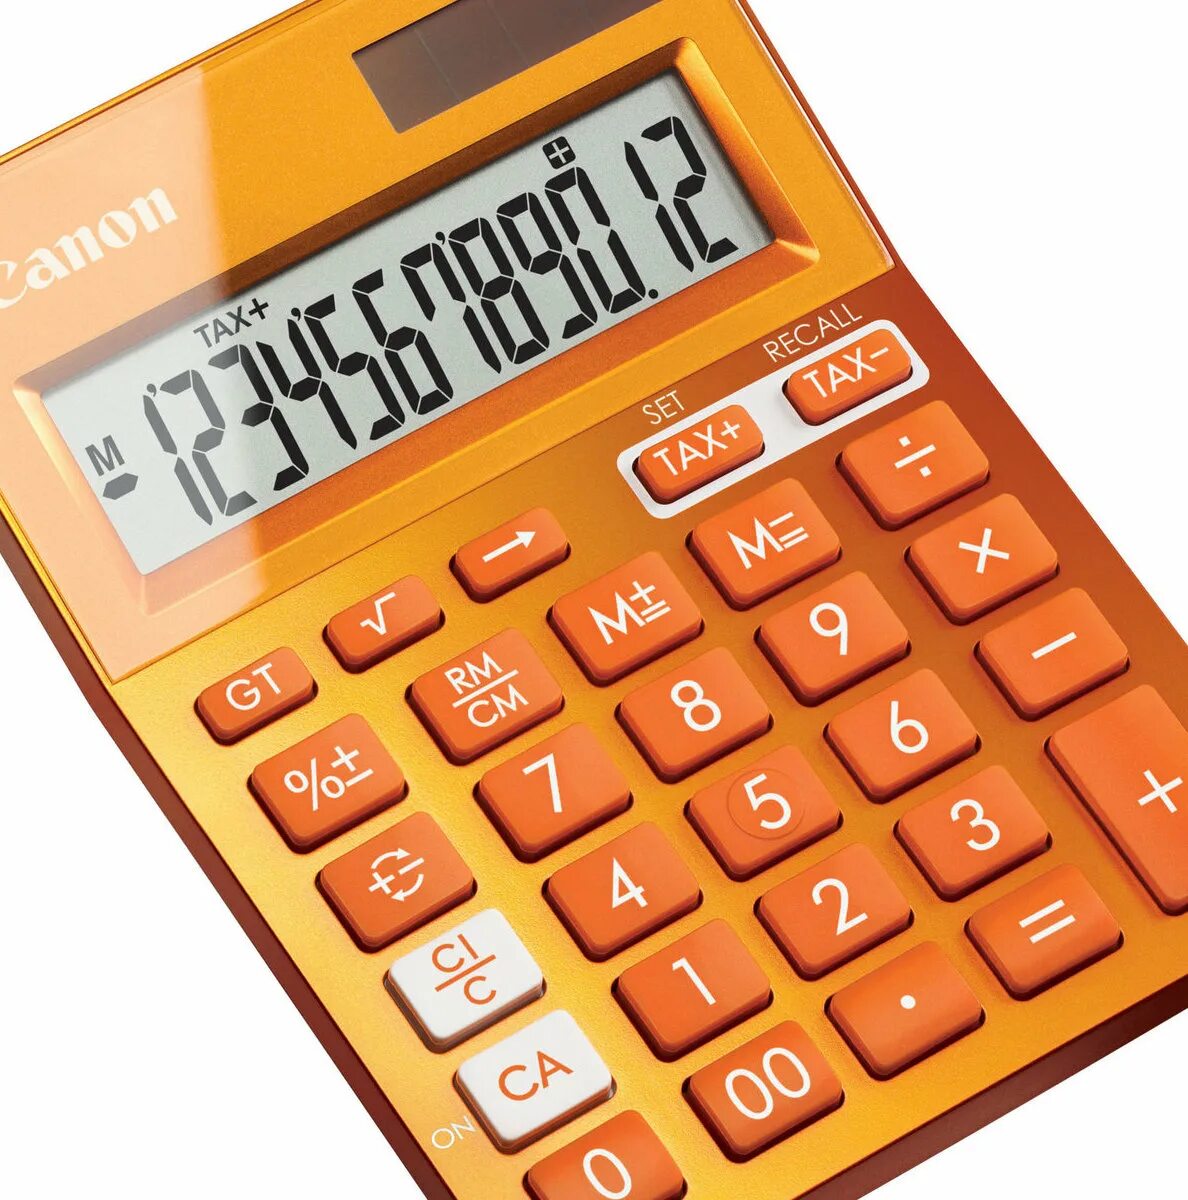 Калькулятор дней жд. Калькулятор. Много калькуляторов. Красивый калькулятор. Расчетный калькулятор.